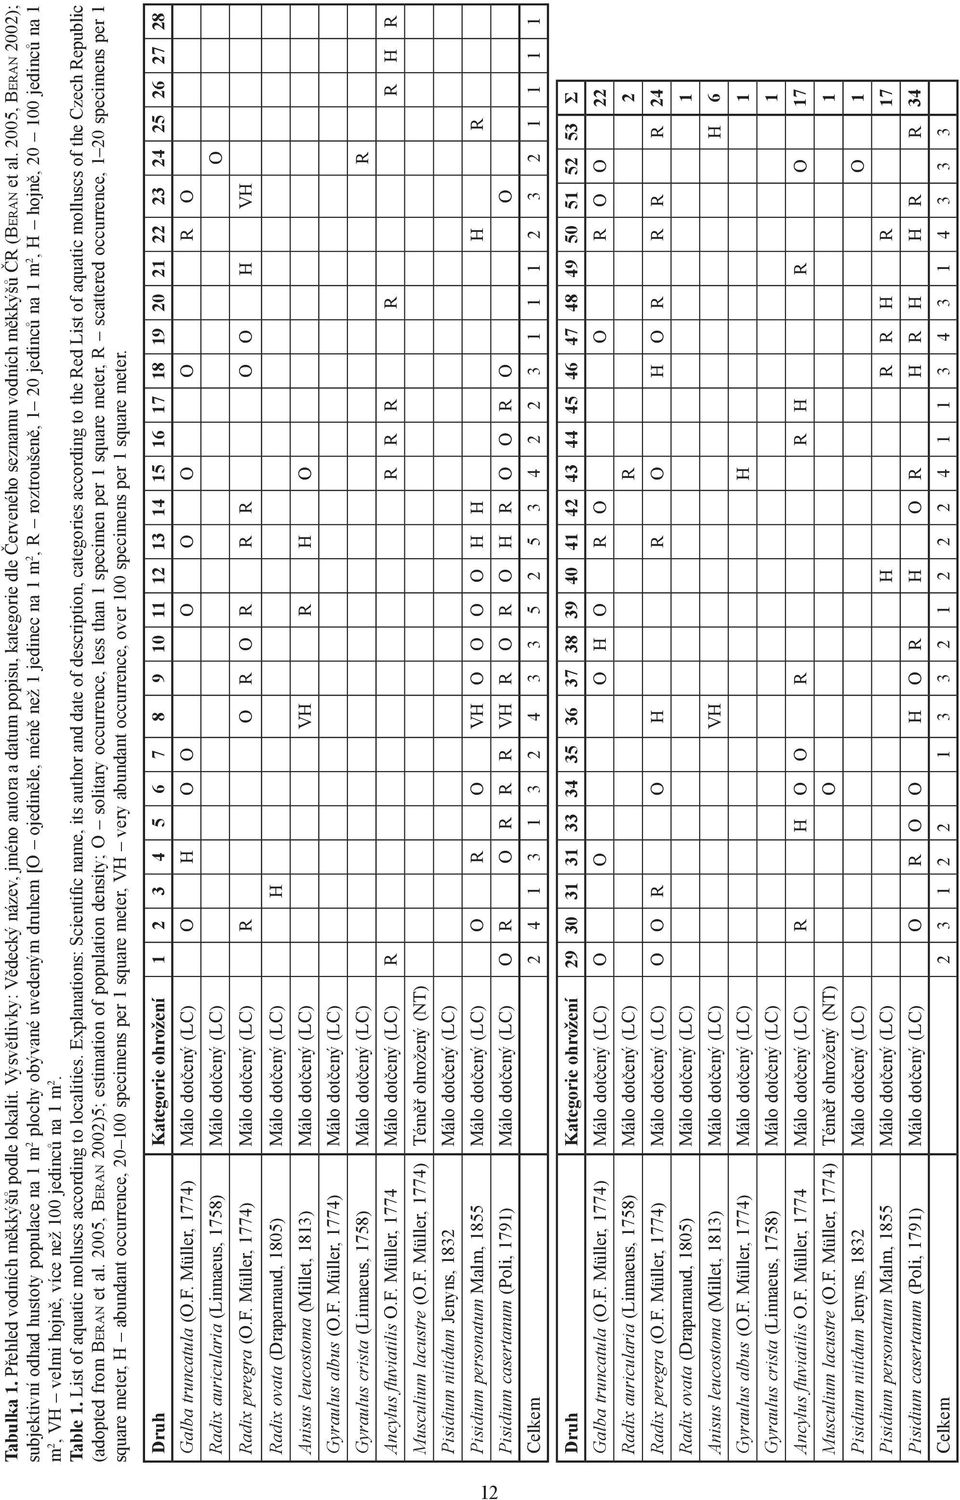 na 1 m 2, VH velmi hojně, více než 100 jedinců na 1 m 2. Table 1. List of aquatic molluscs according to localities.